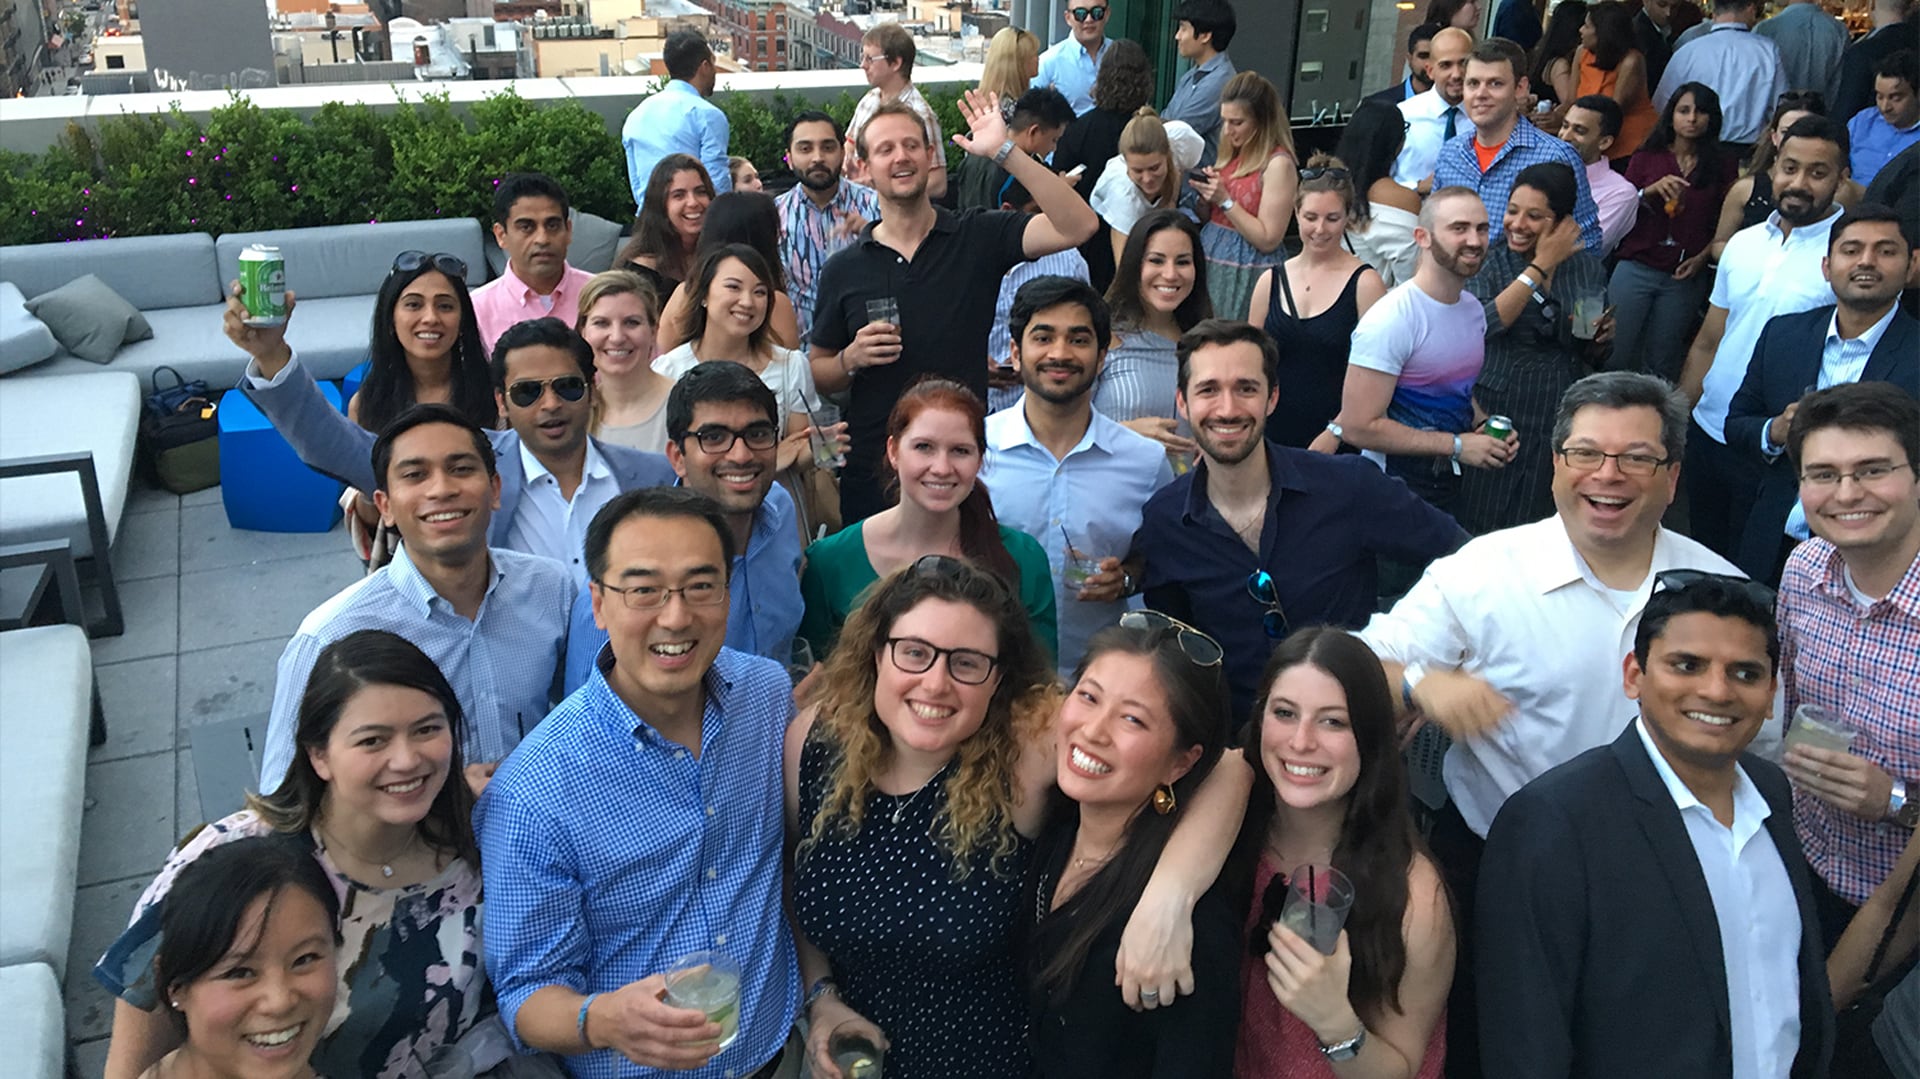 A group of Deloitte Digital employees celebrating